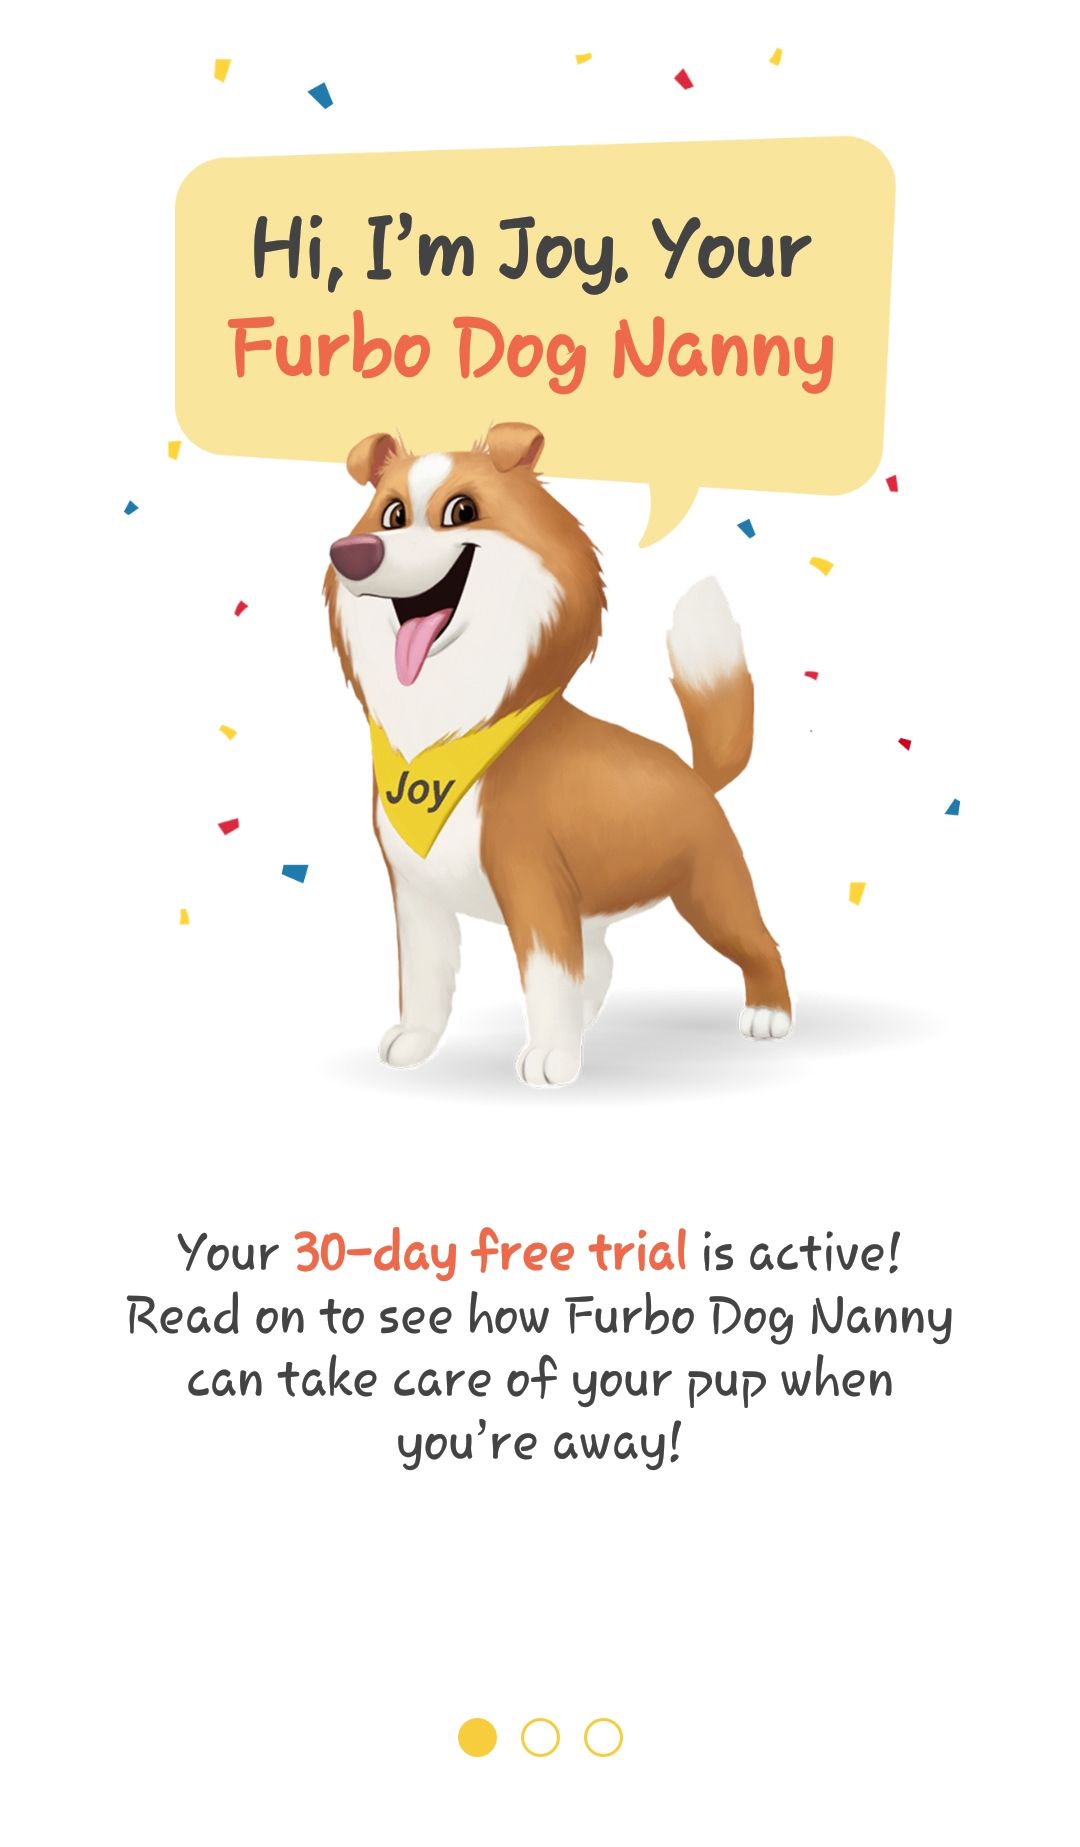 Furbo dog nanny free trial